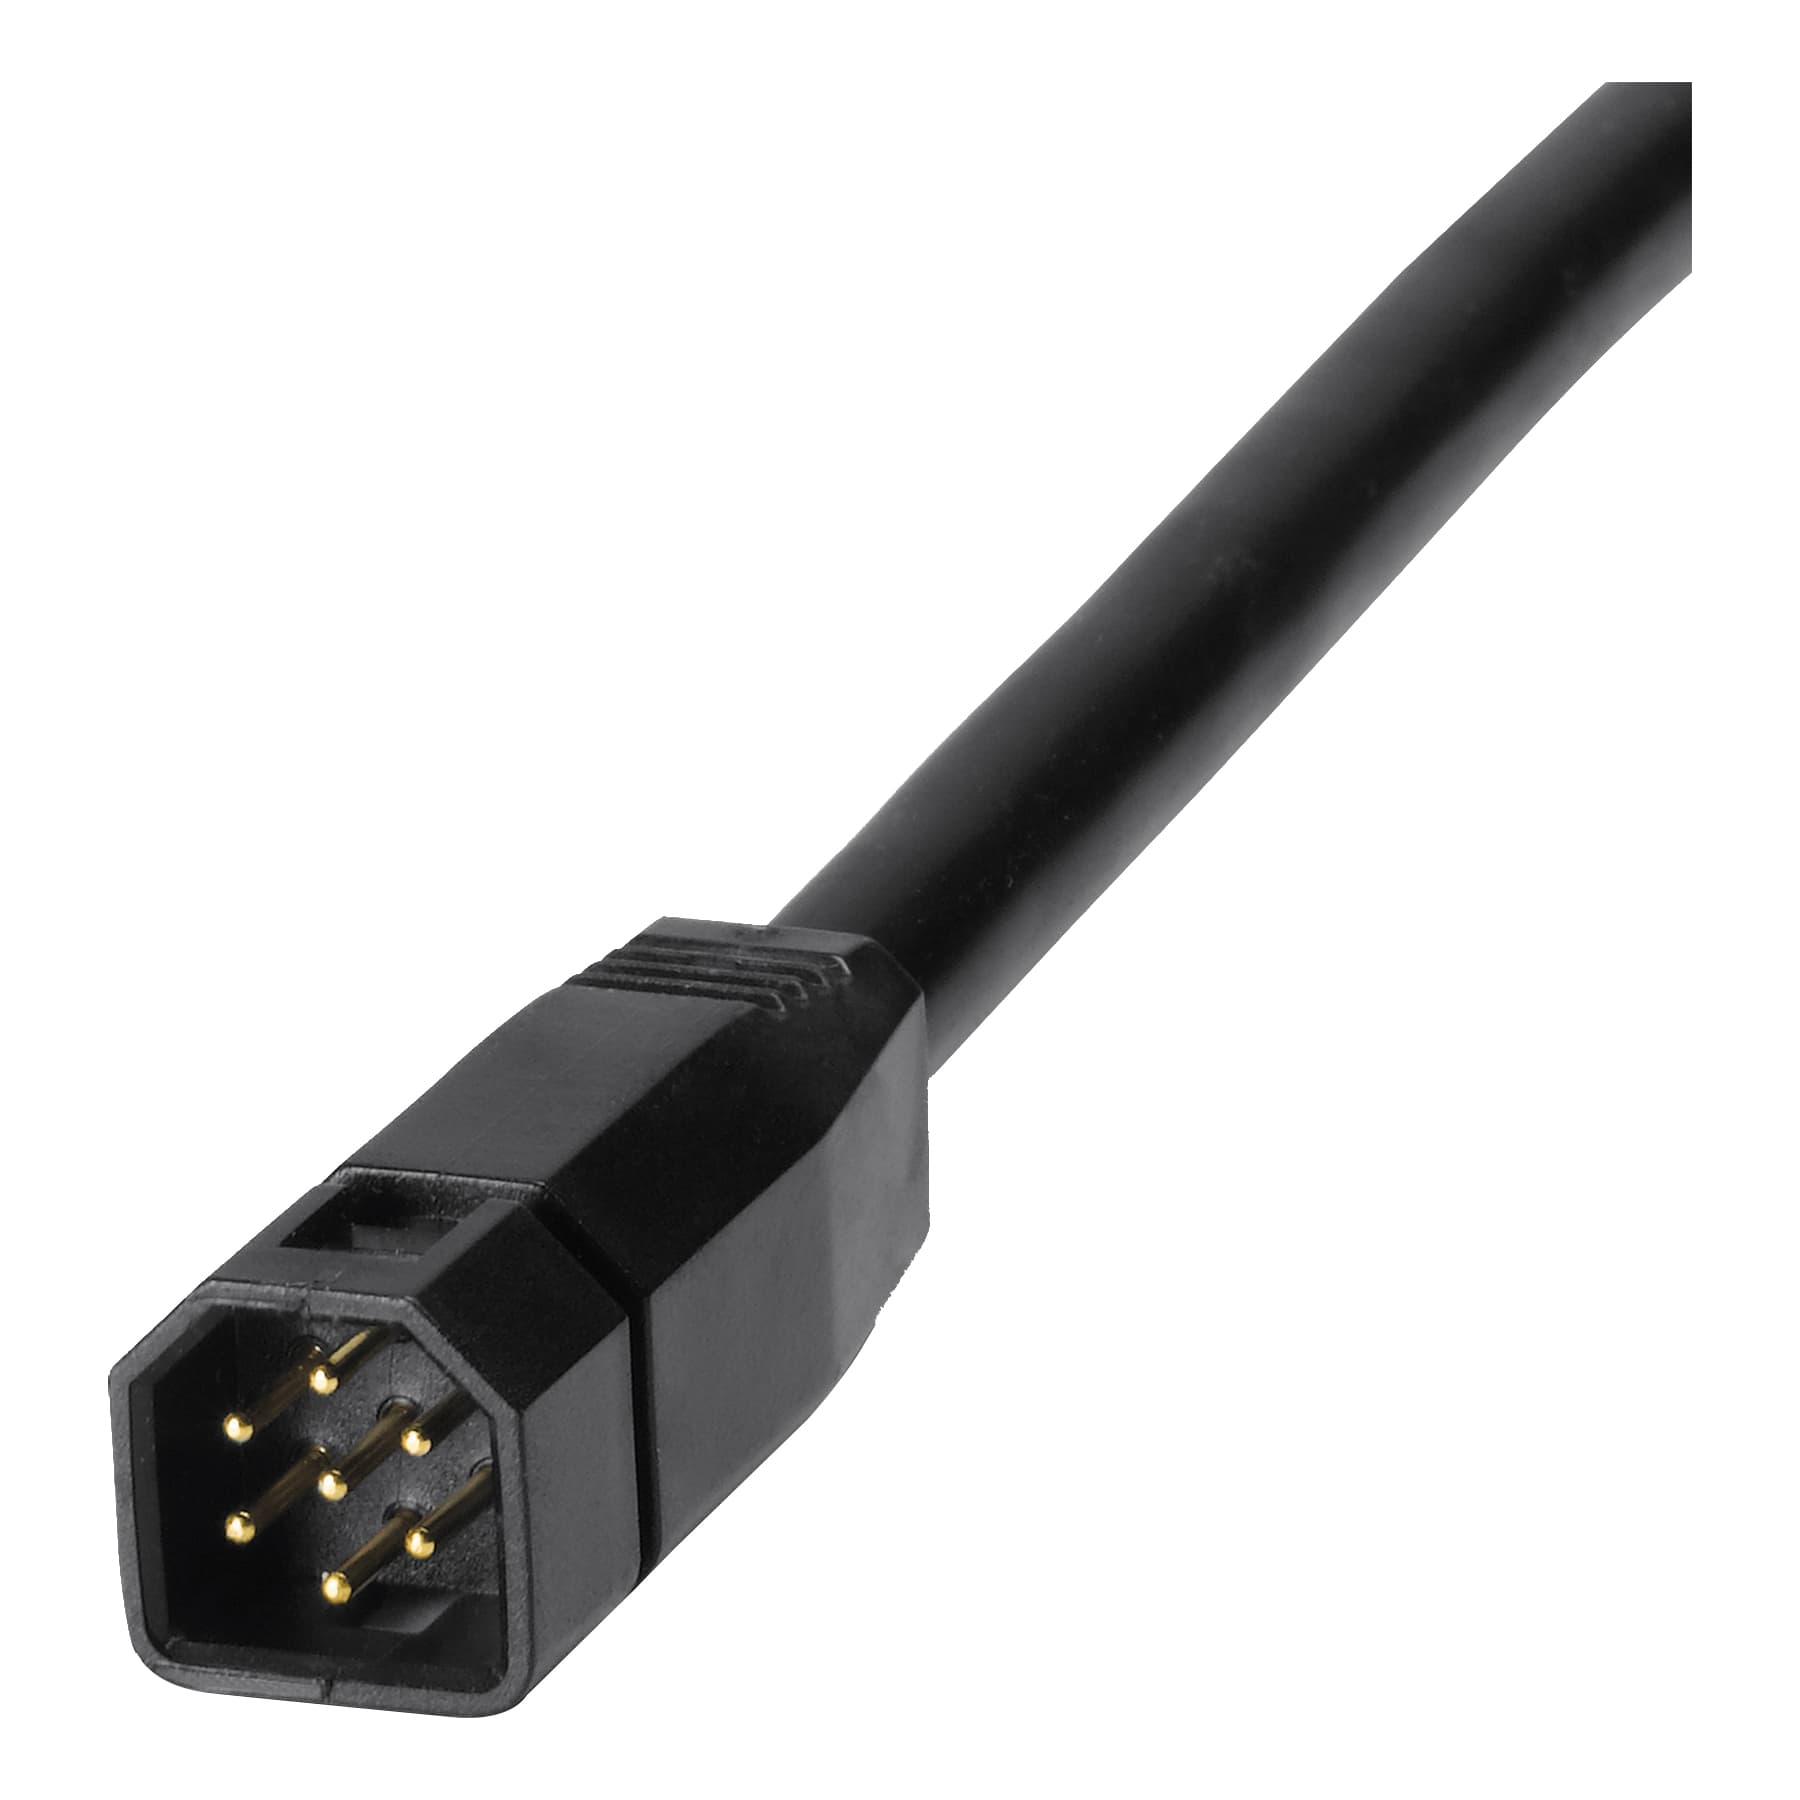 Minn Kota® MDI Adapter Cable / MKR-MDI-2 